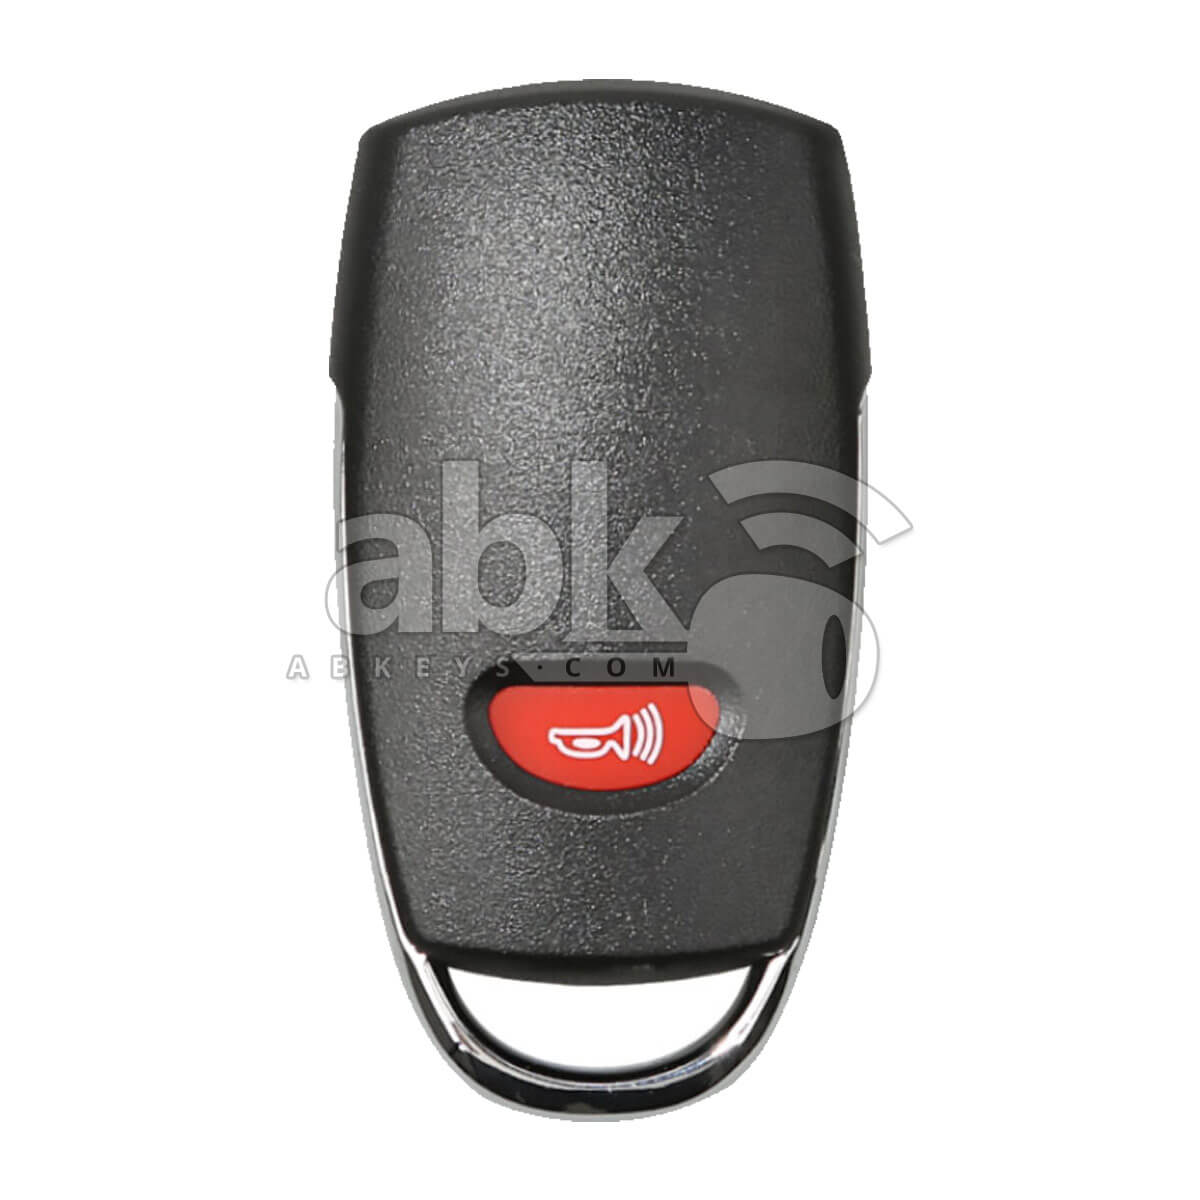 Xhorse VVDI Key Tool VVDI2 Hyundai Style Wired Remote Control 4Buttons XKHY04EN - ABK-1015-XKHY04EN 